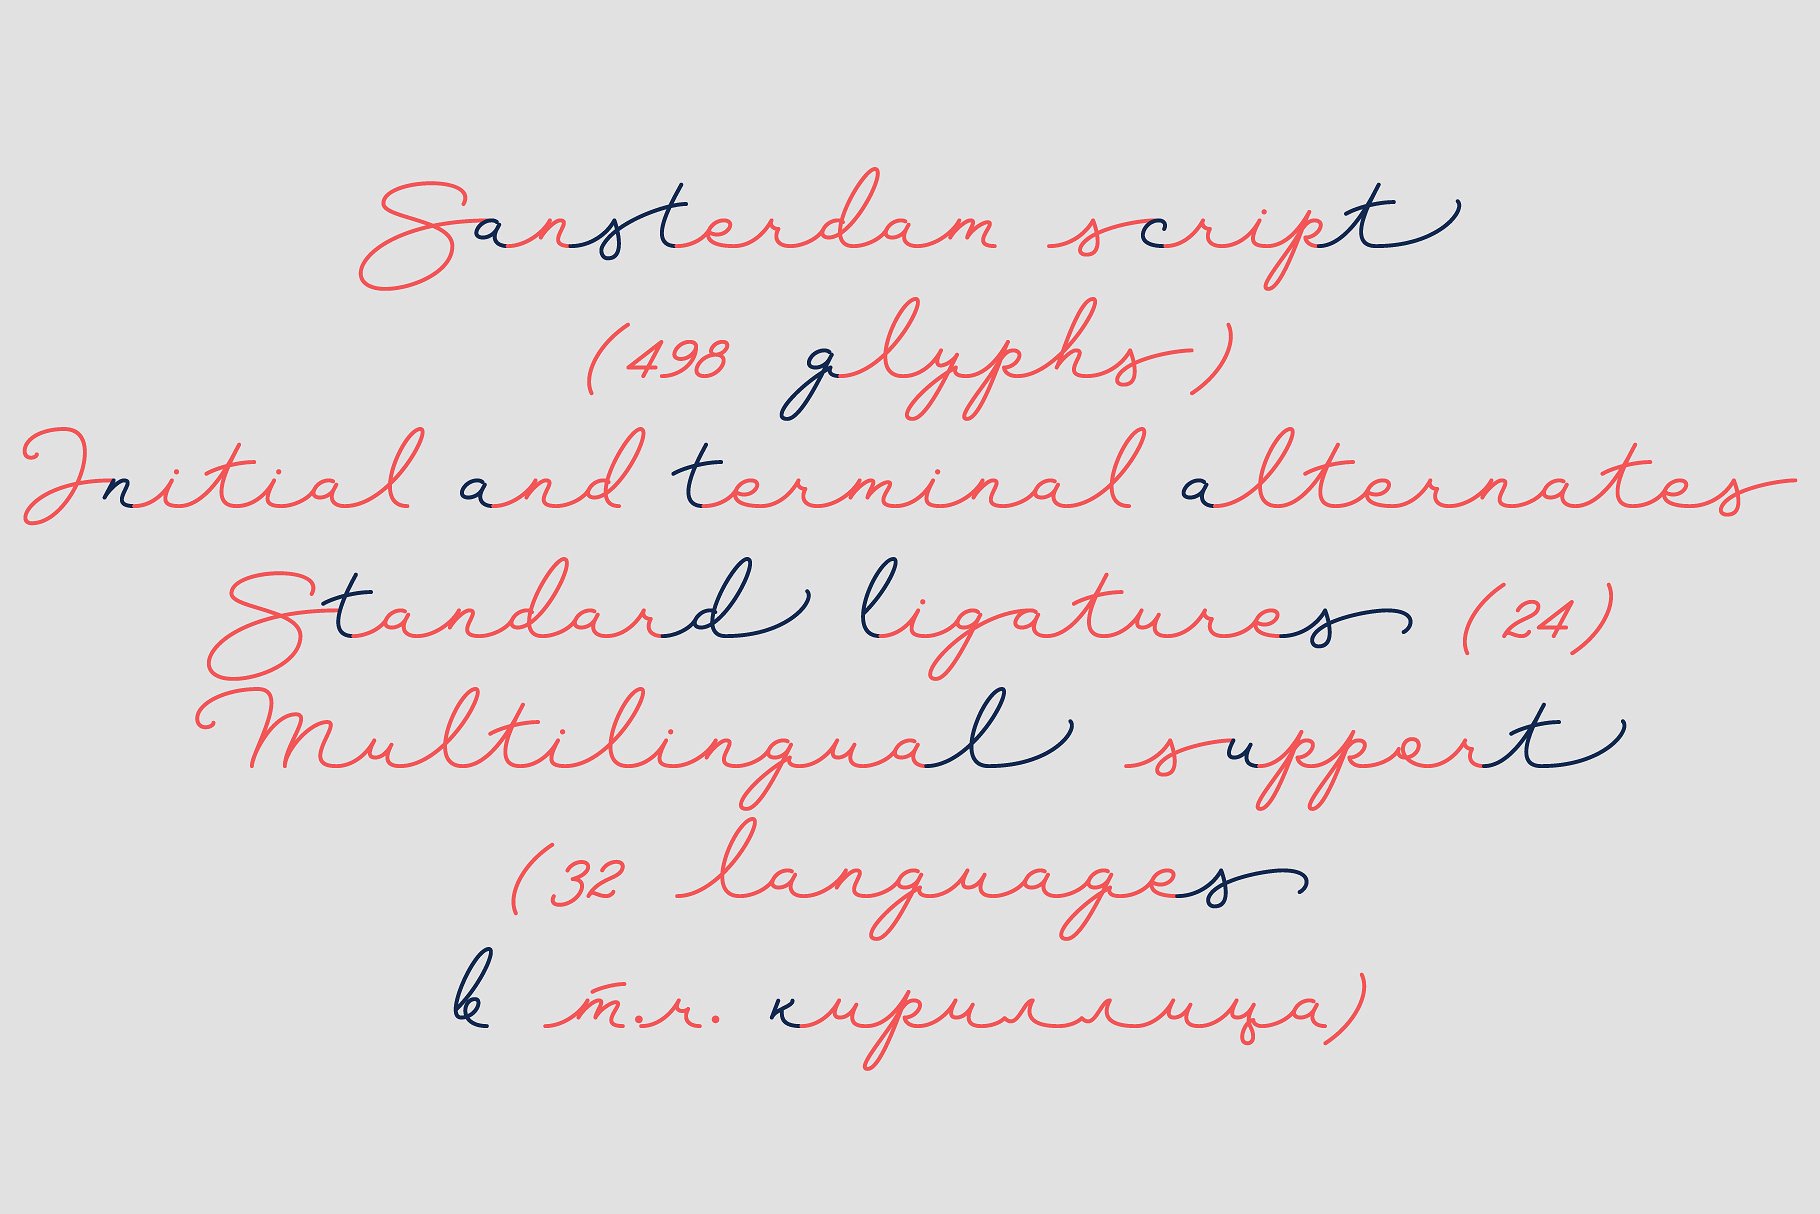 Пример шрифта Sansterdam Inline